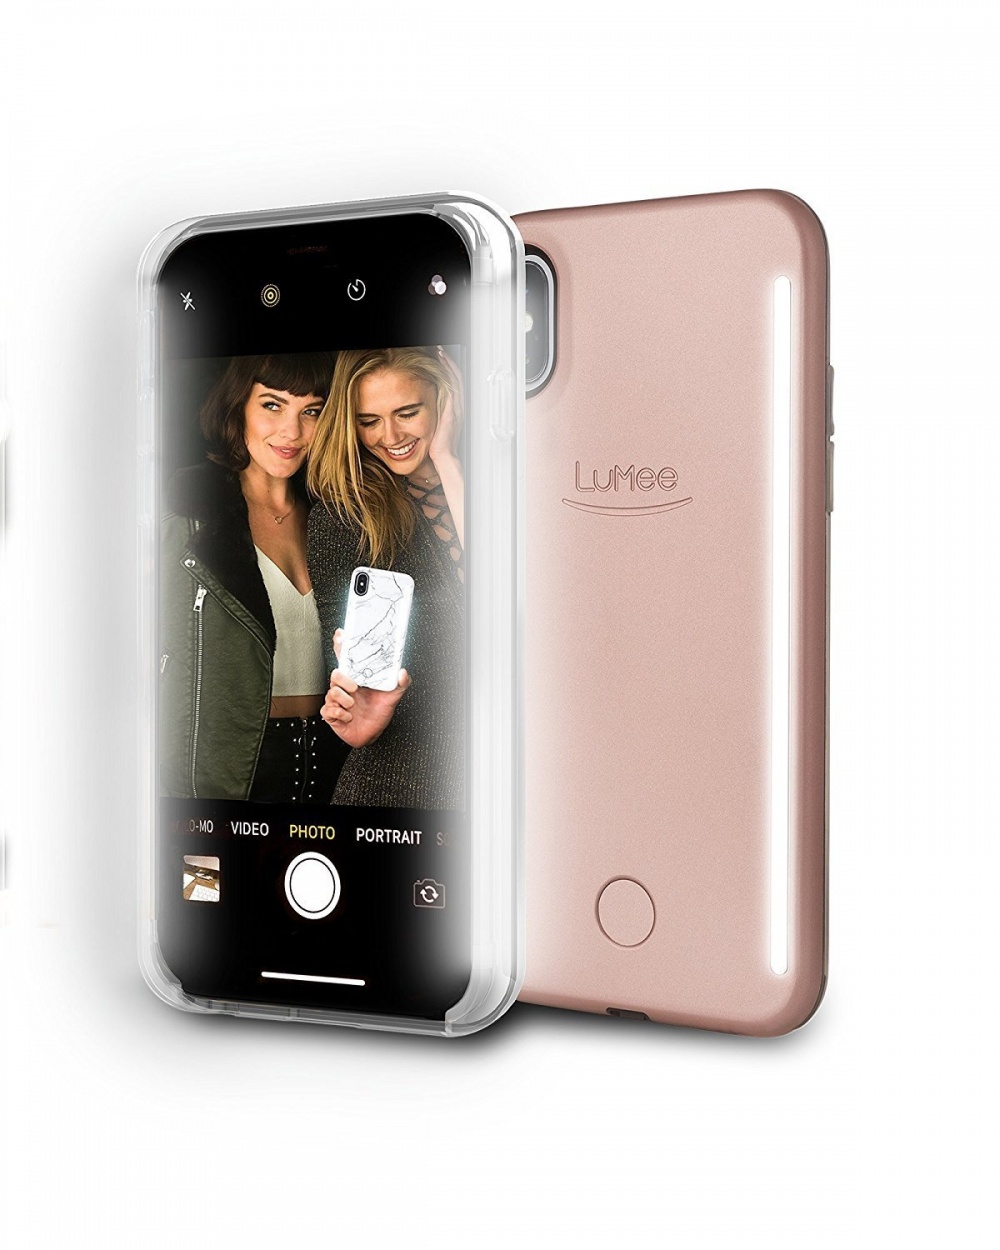 Remark Iphone X用ledライティングケース Lumee Duo Led Lighting Case For Iphone X を発売 アクセサリ Mac Otakara